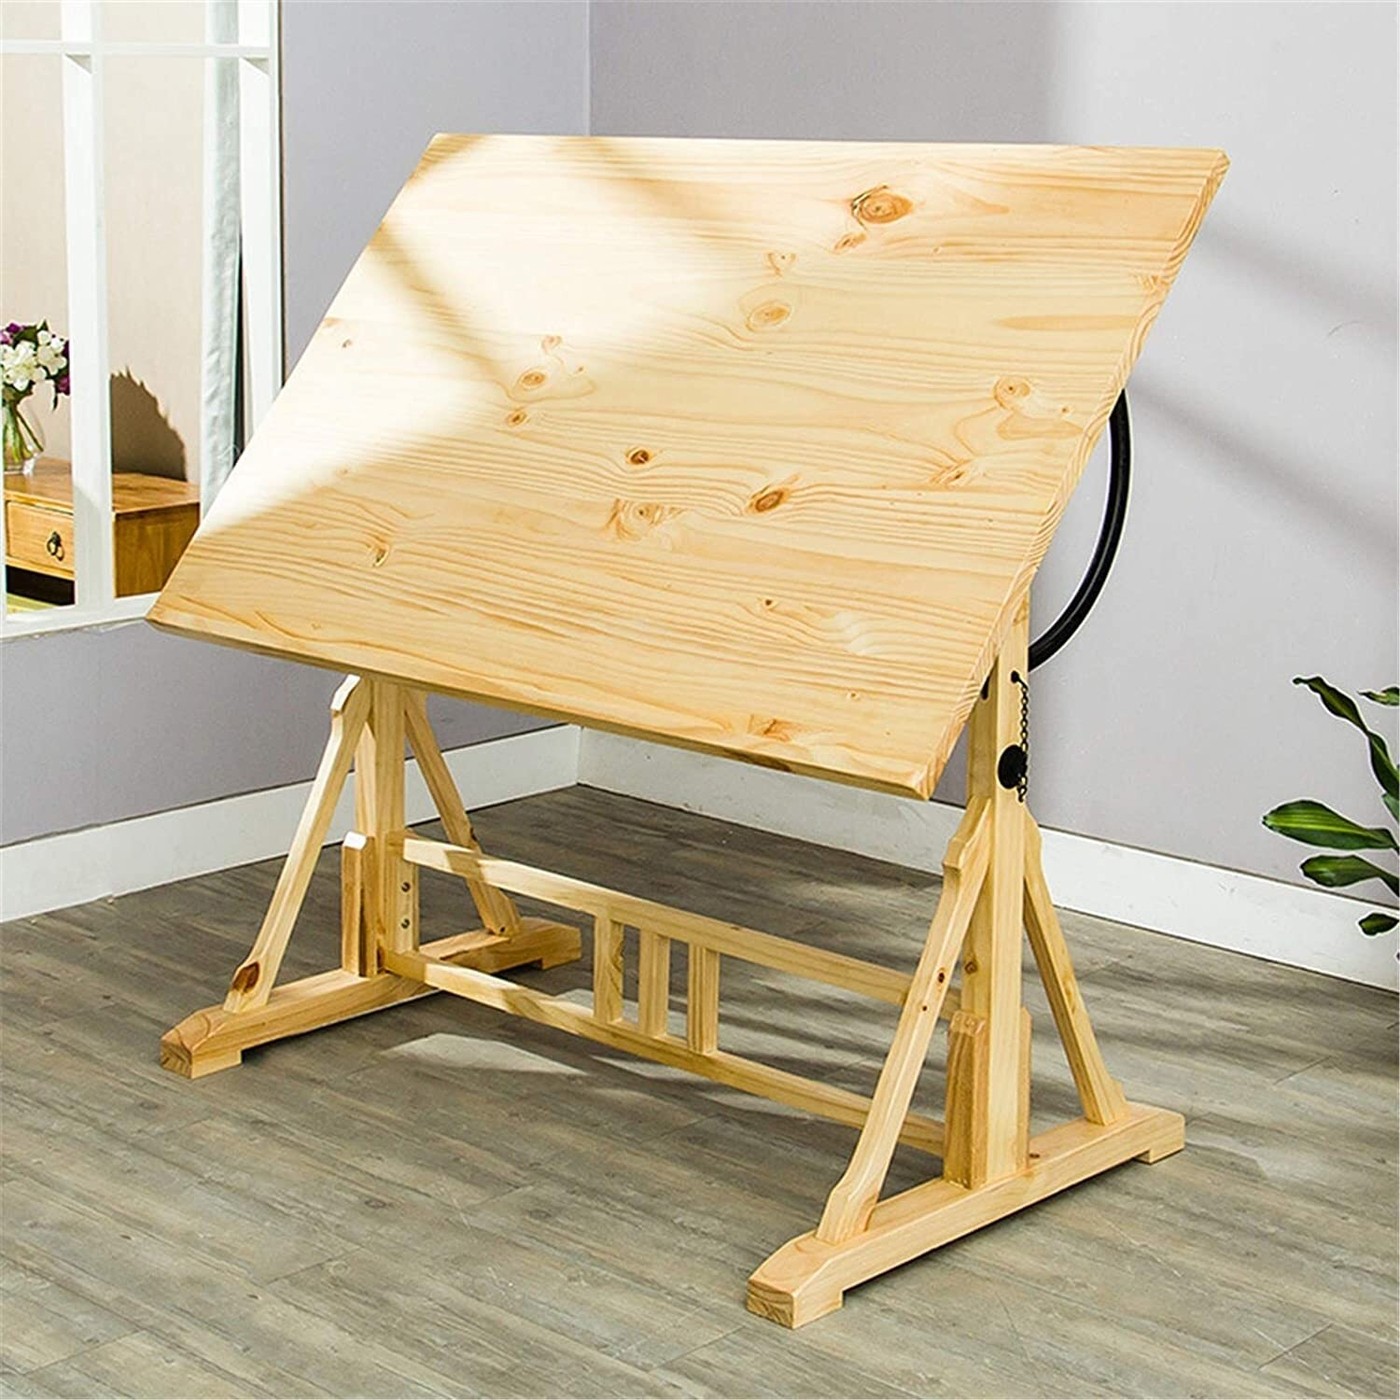 https://visualhunt.com/photos/19/solid-wood-drafting-table.jpeg